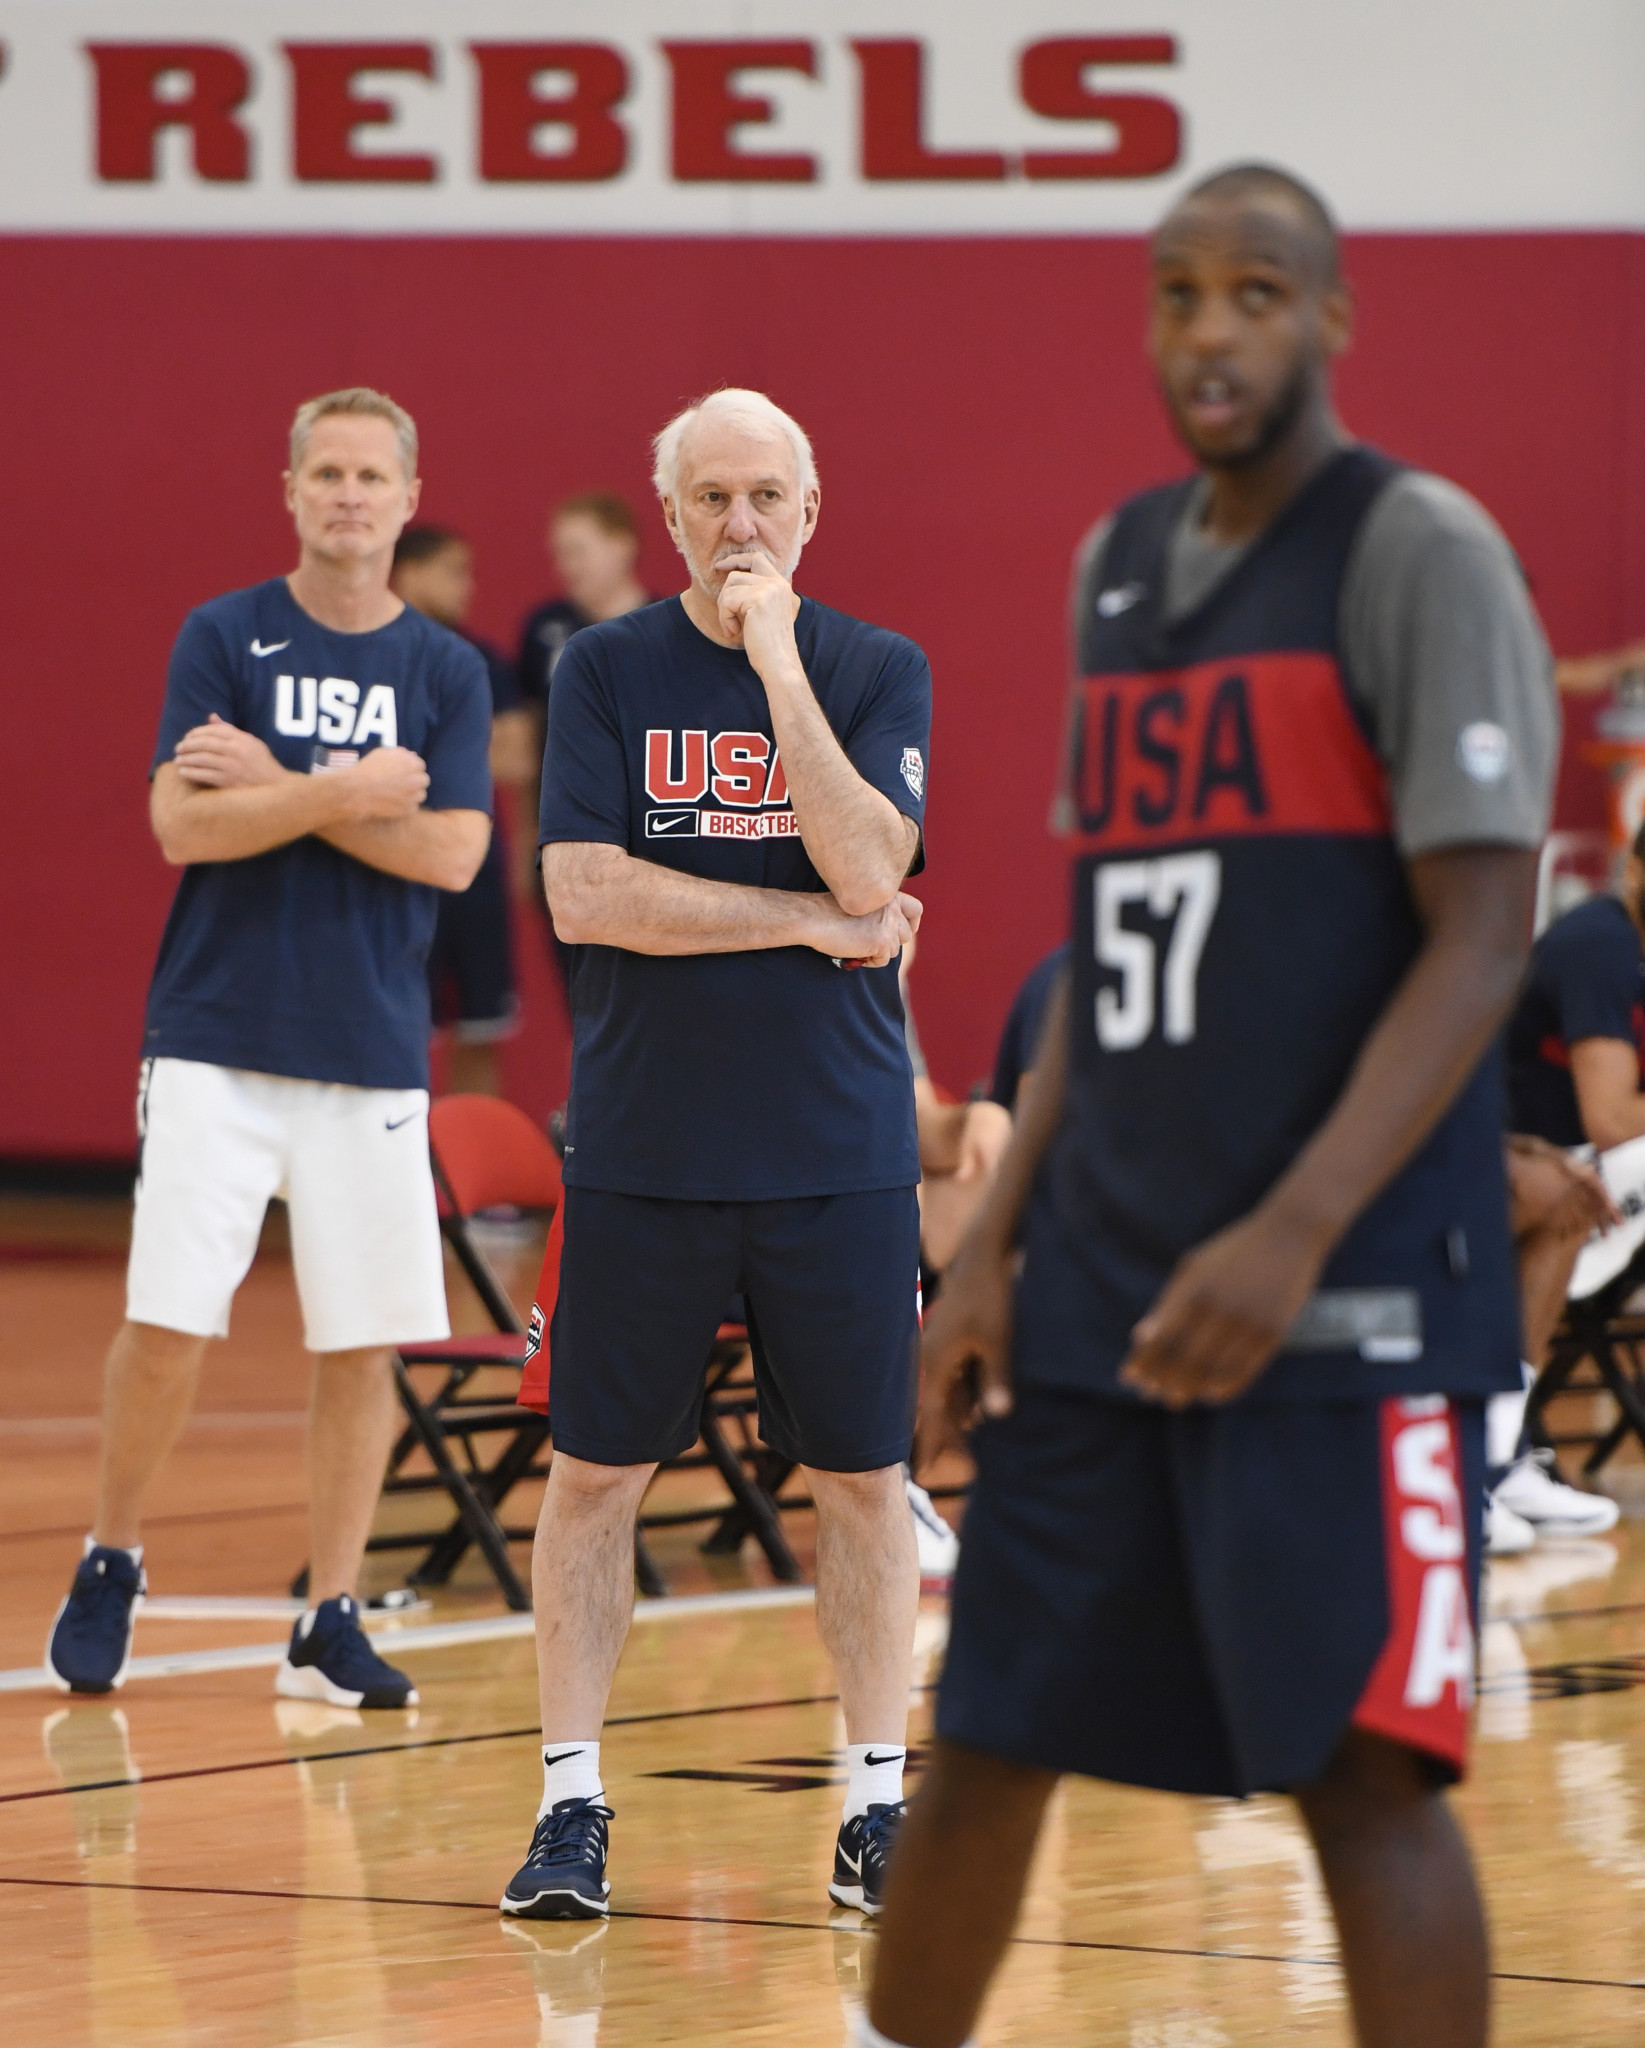 USA Basketball coaches continuing Tokyo 2020 preparations as normal